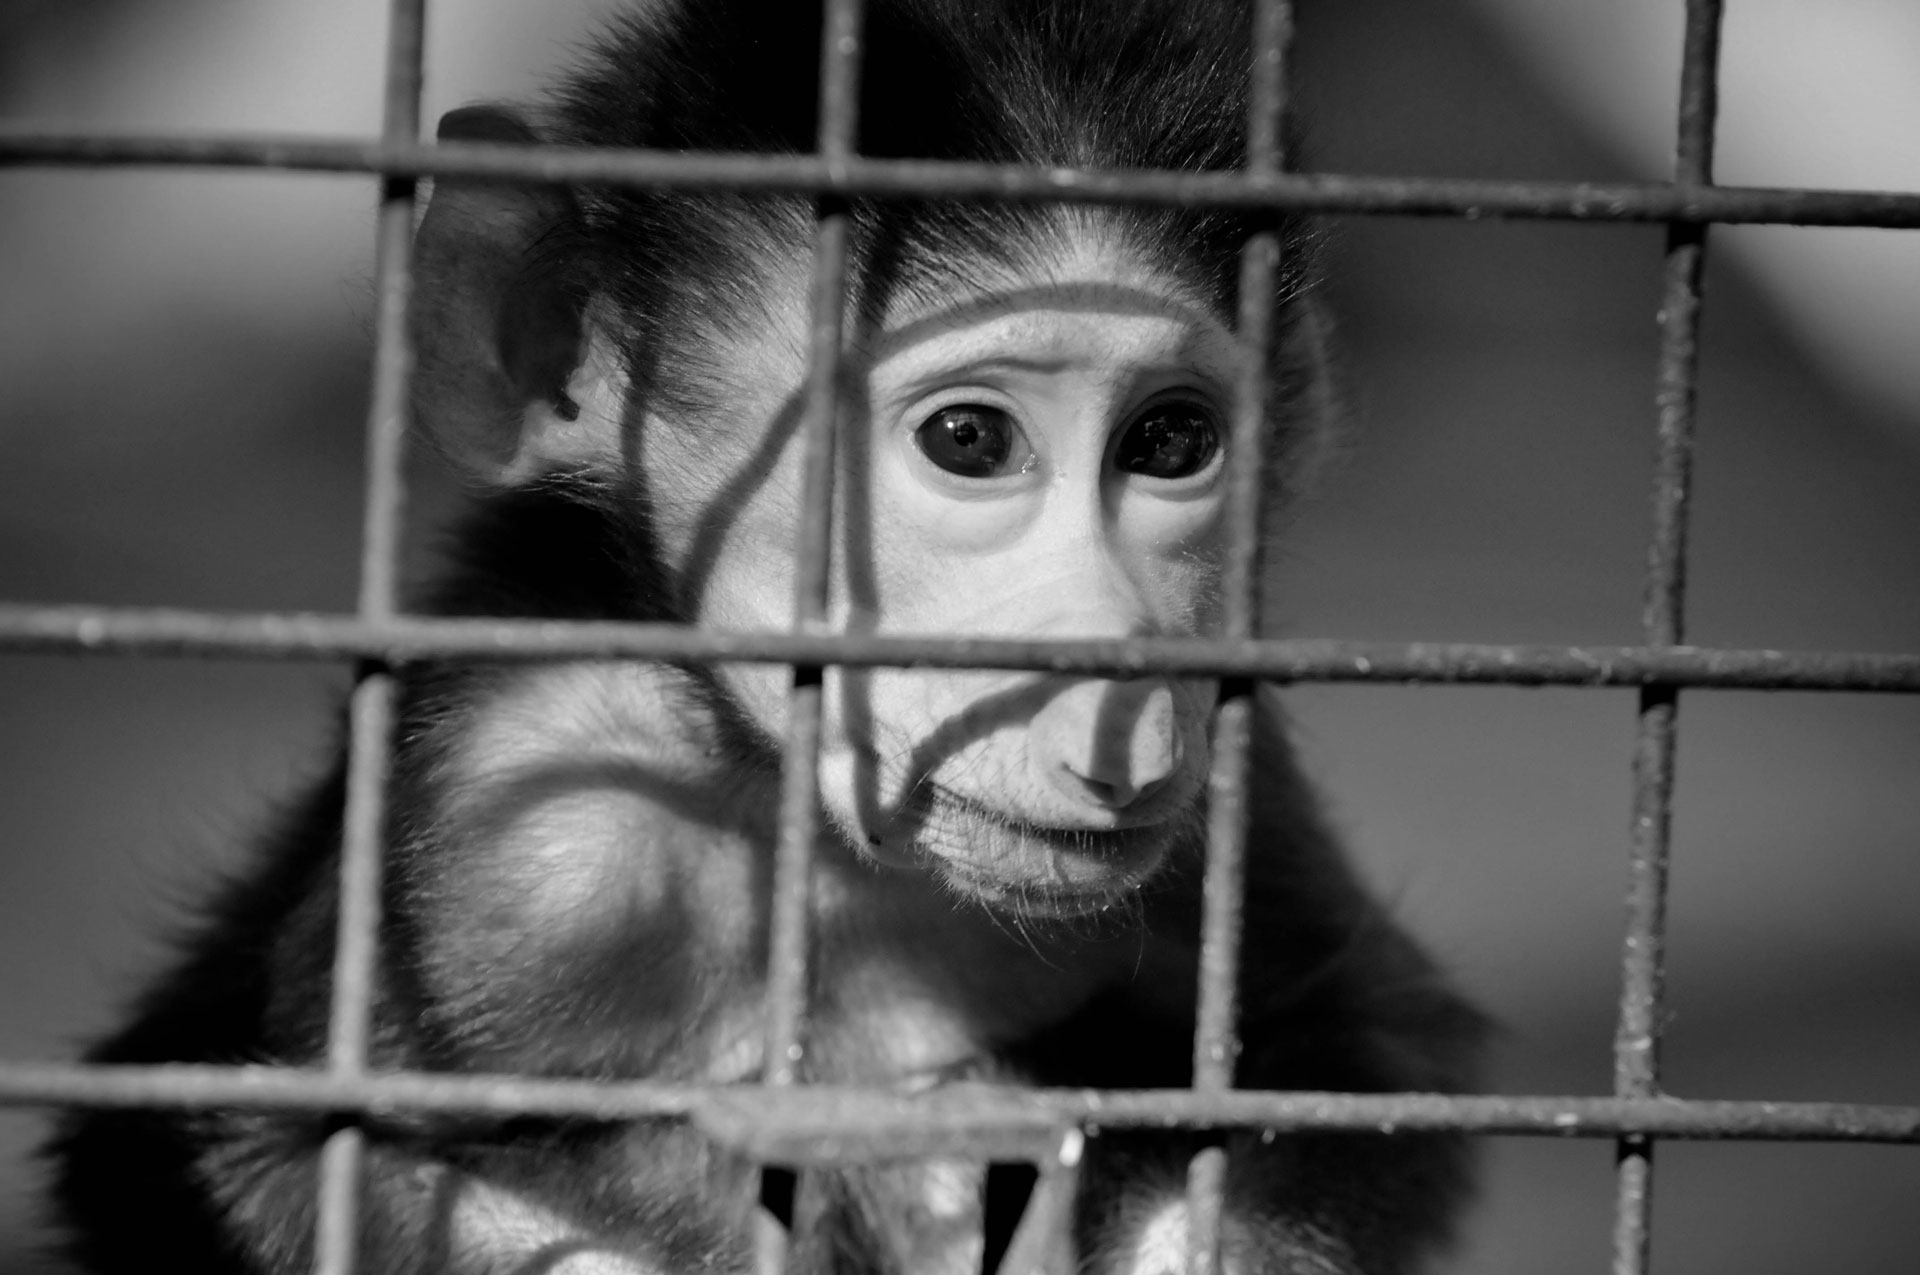 La jaula de los monos